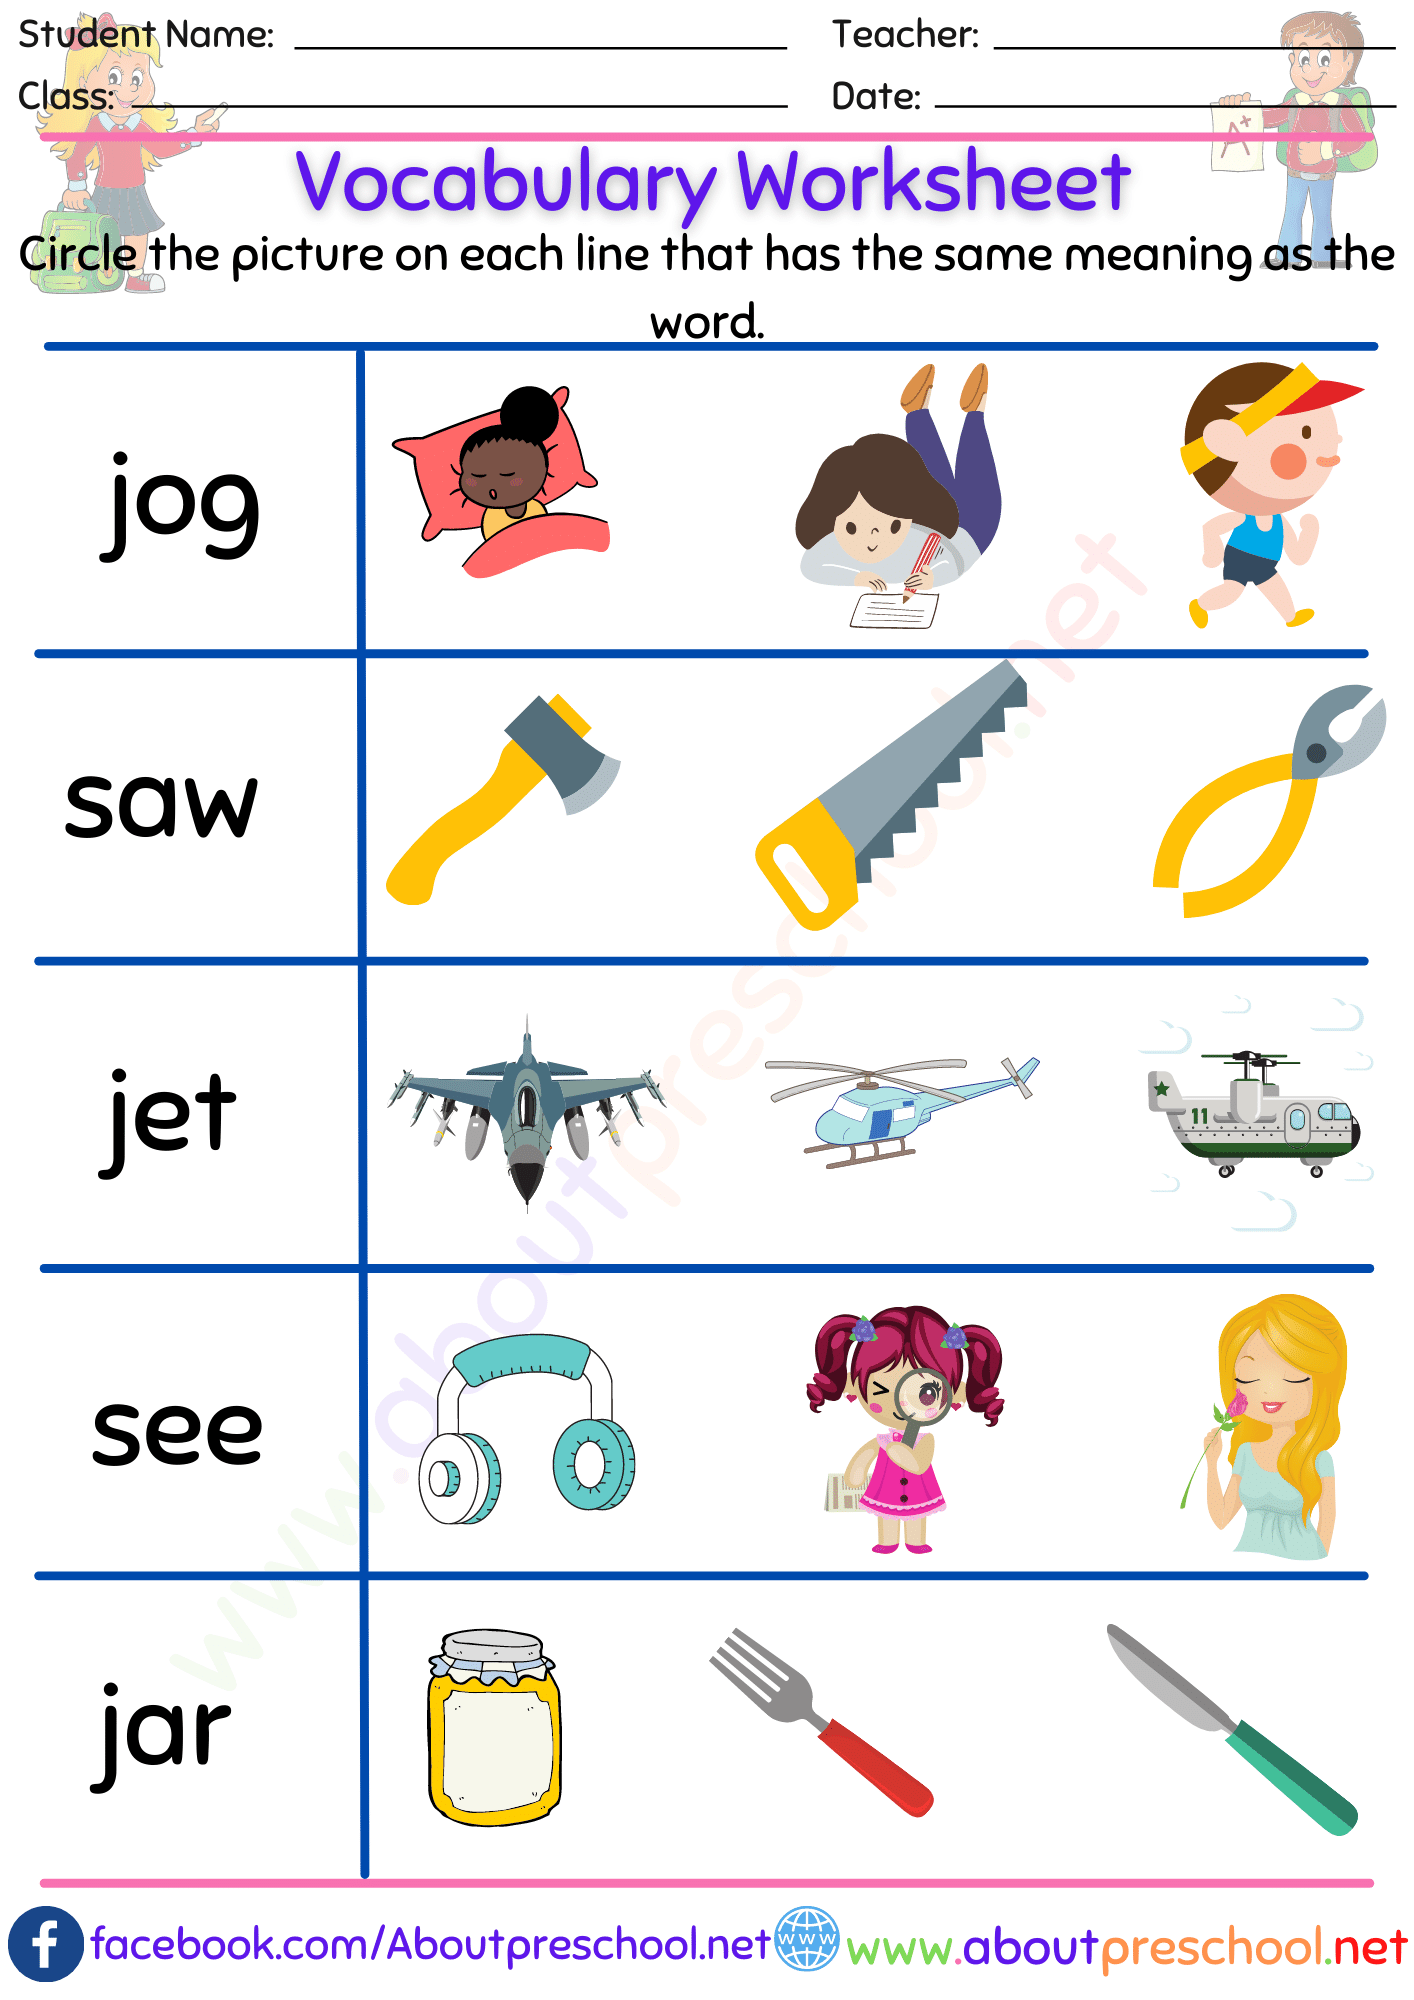 Vocabulary Worksheet-9